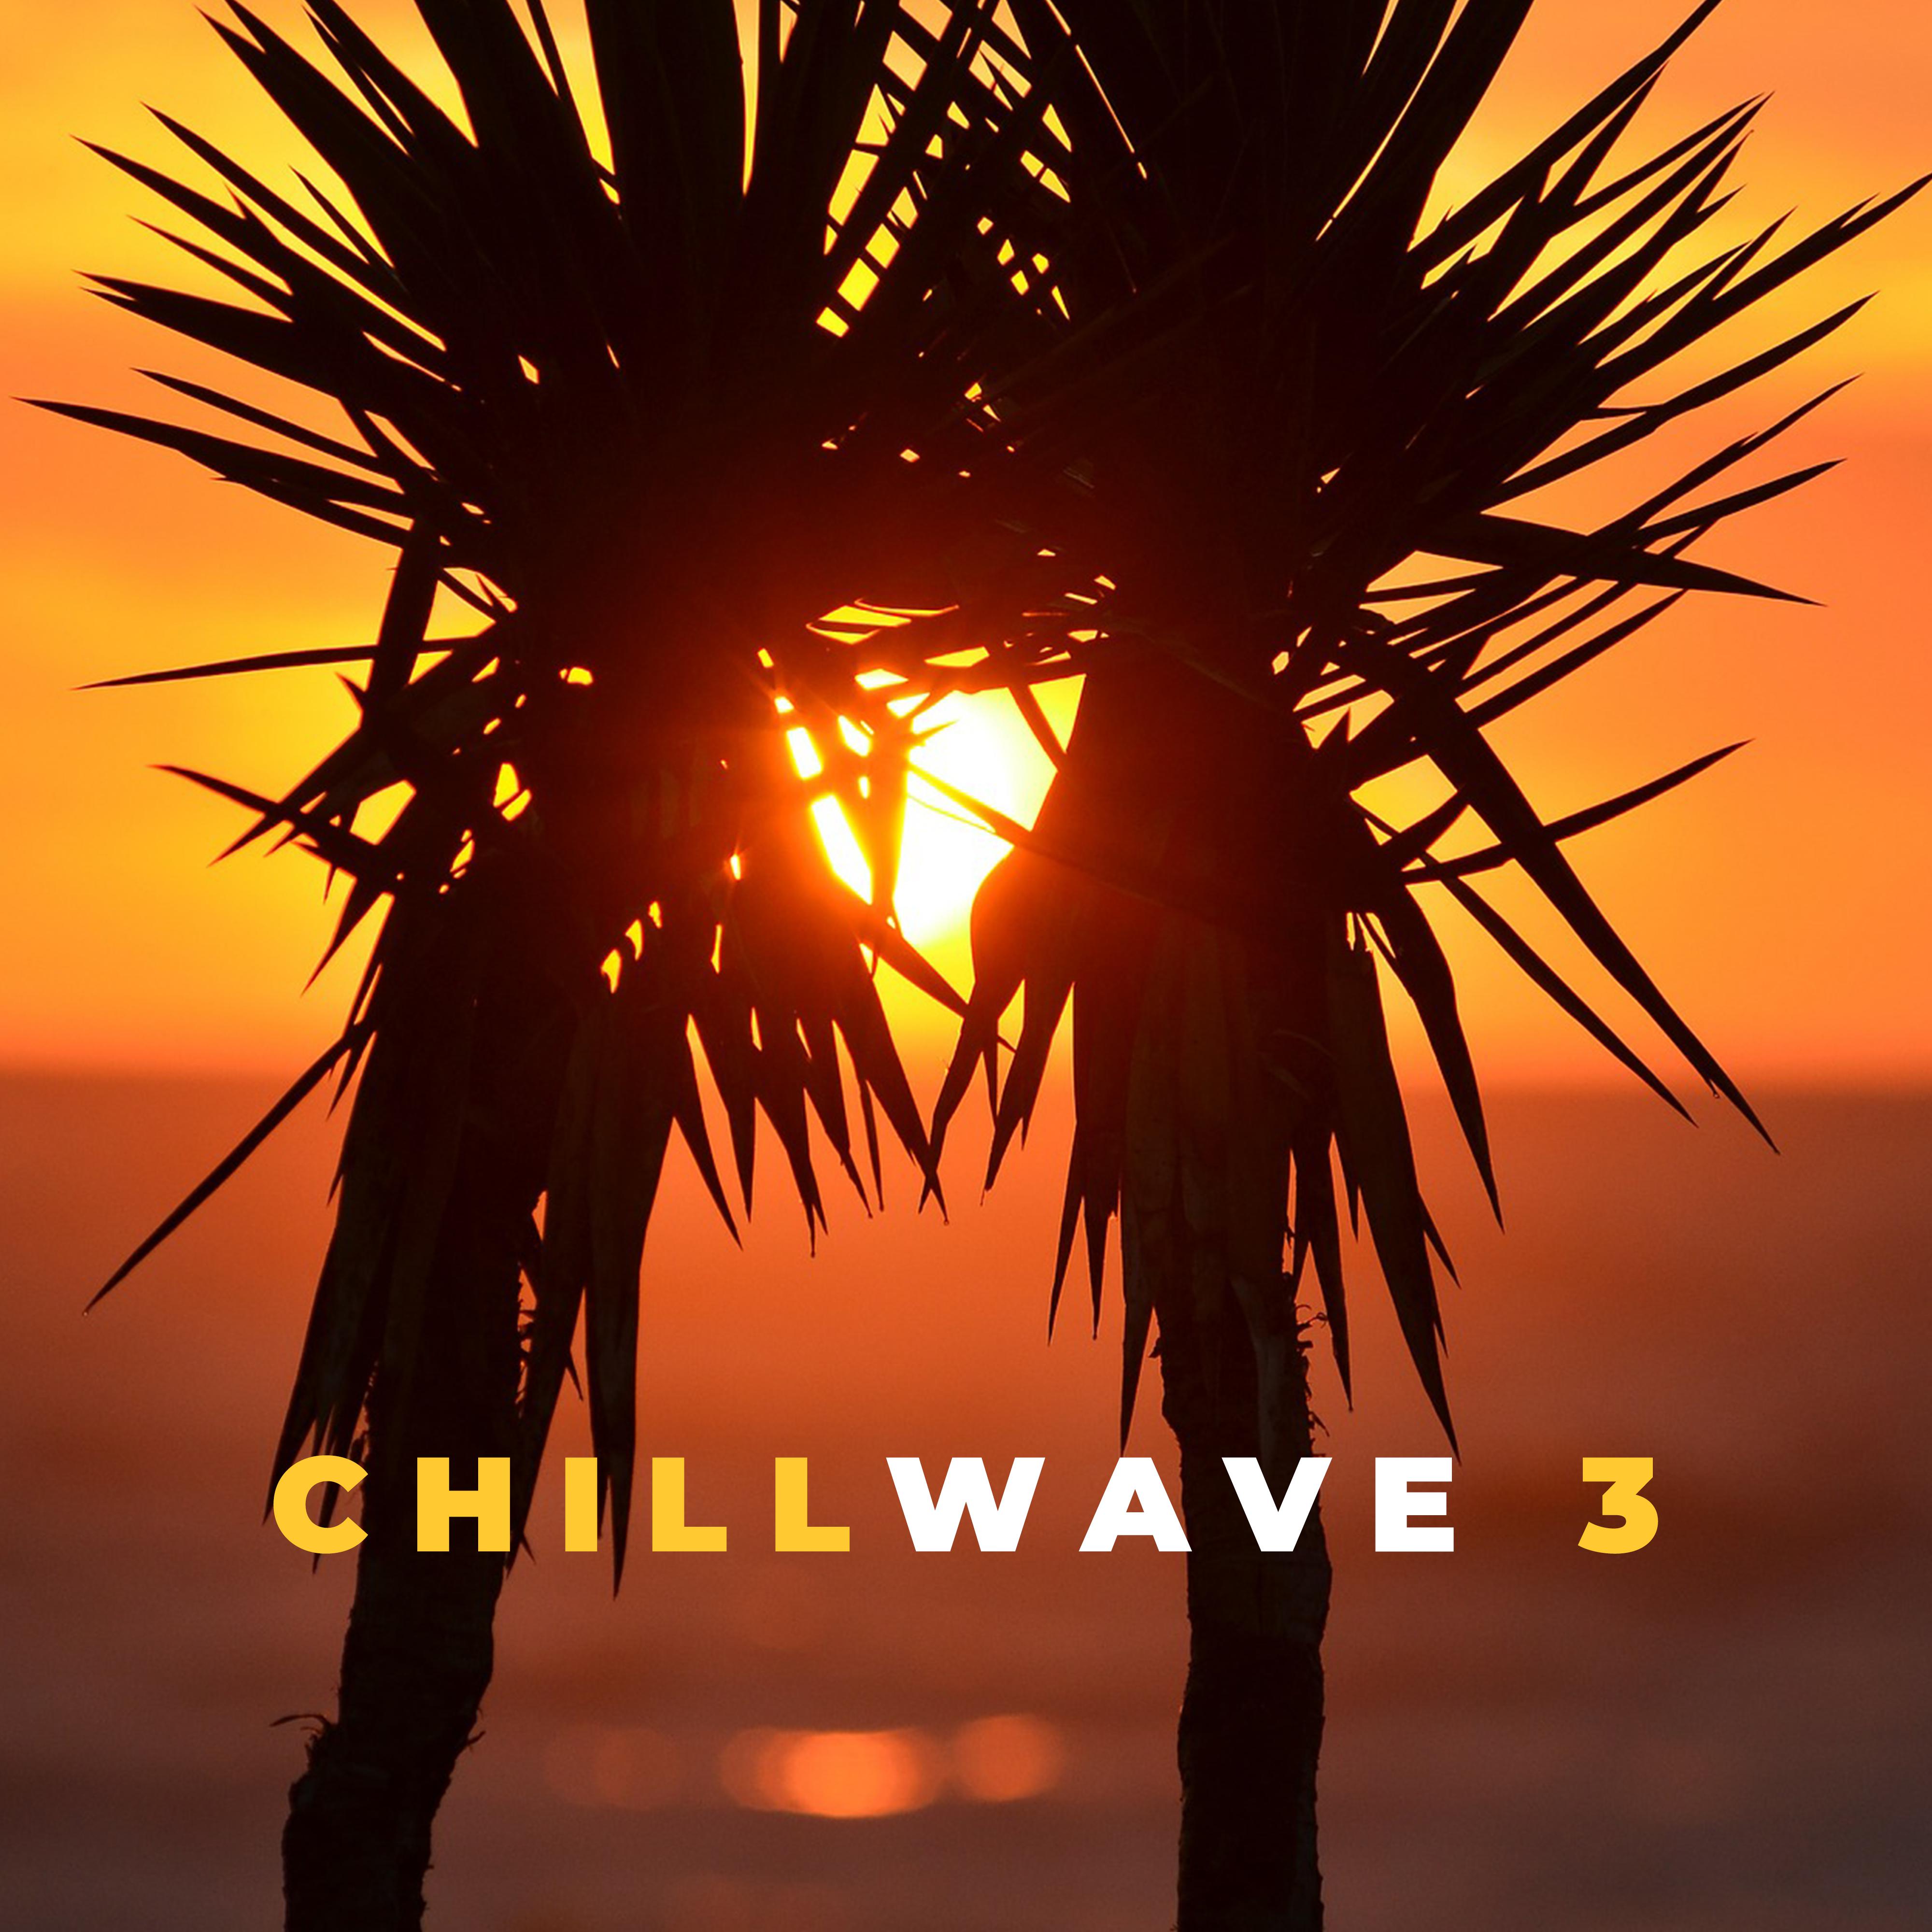 Chillwave 3